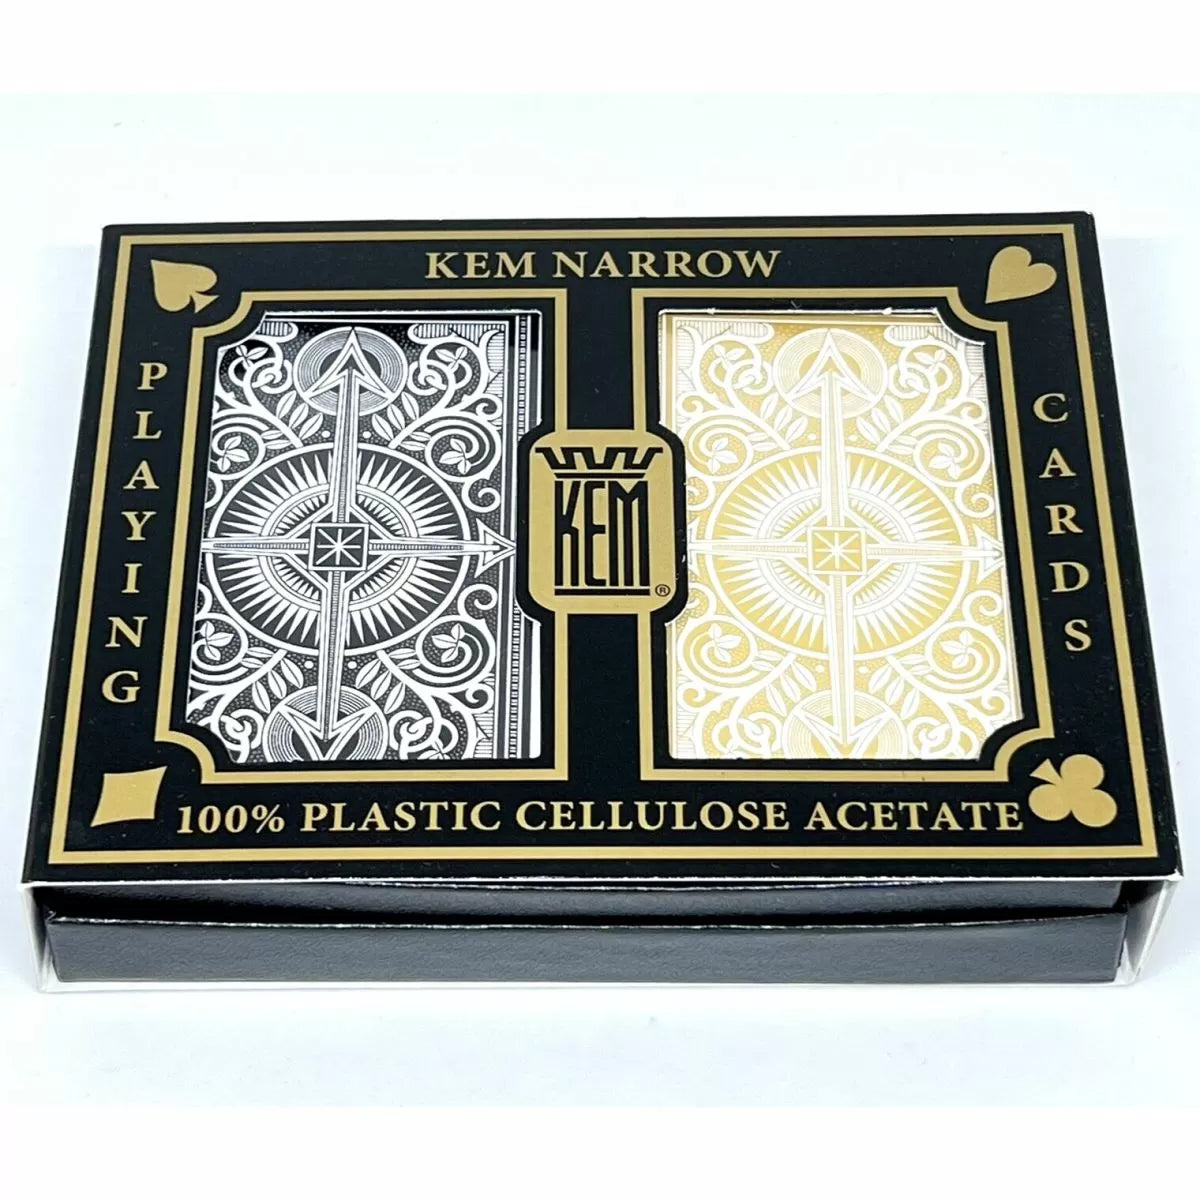 Kem Arrow Black/Gold Narrow Standard Playing Cards